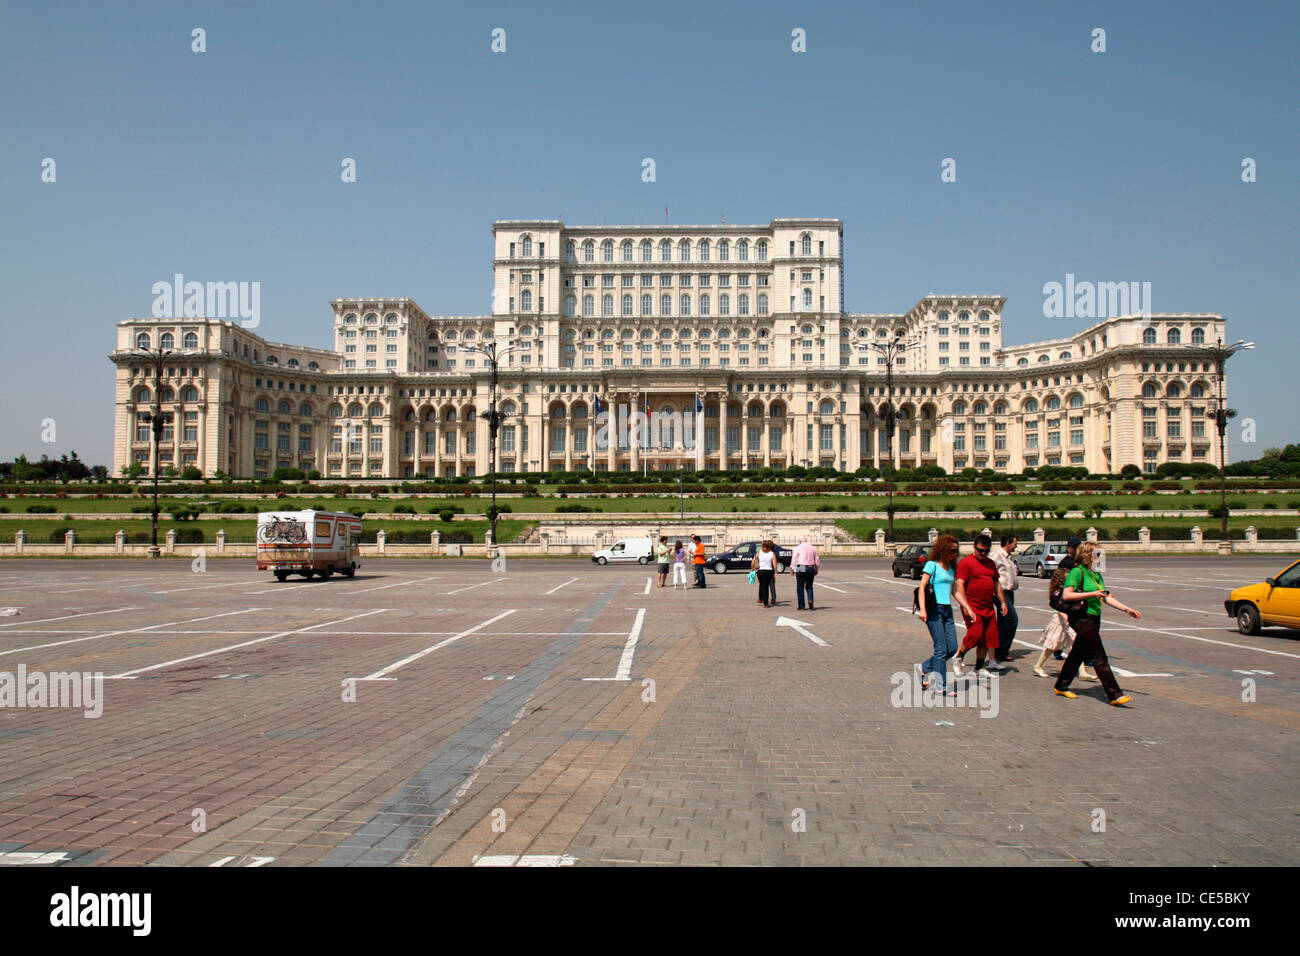 Europa, Rumänien, Bukarest, Palast des Parlaments auch bekannt als Haus des Volkes Stockfoto